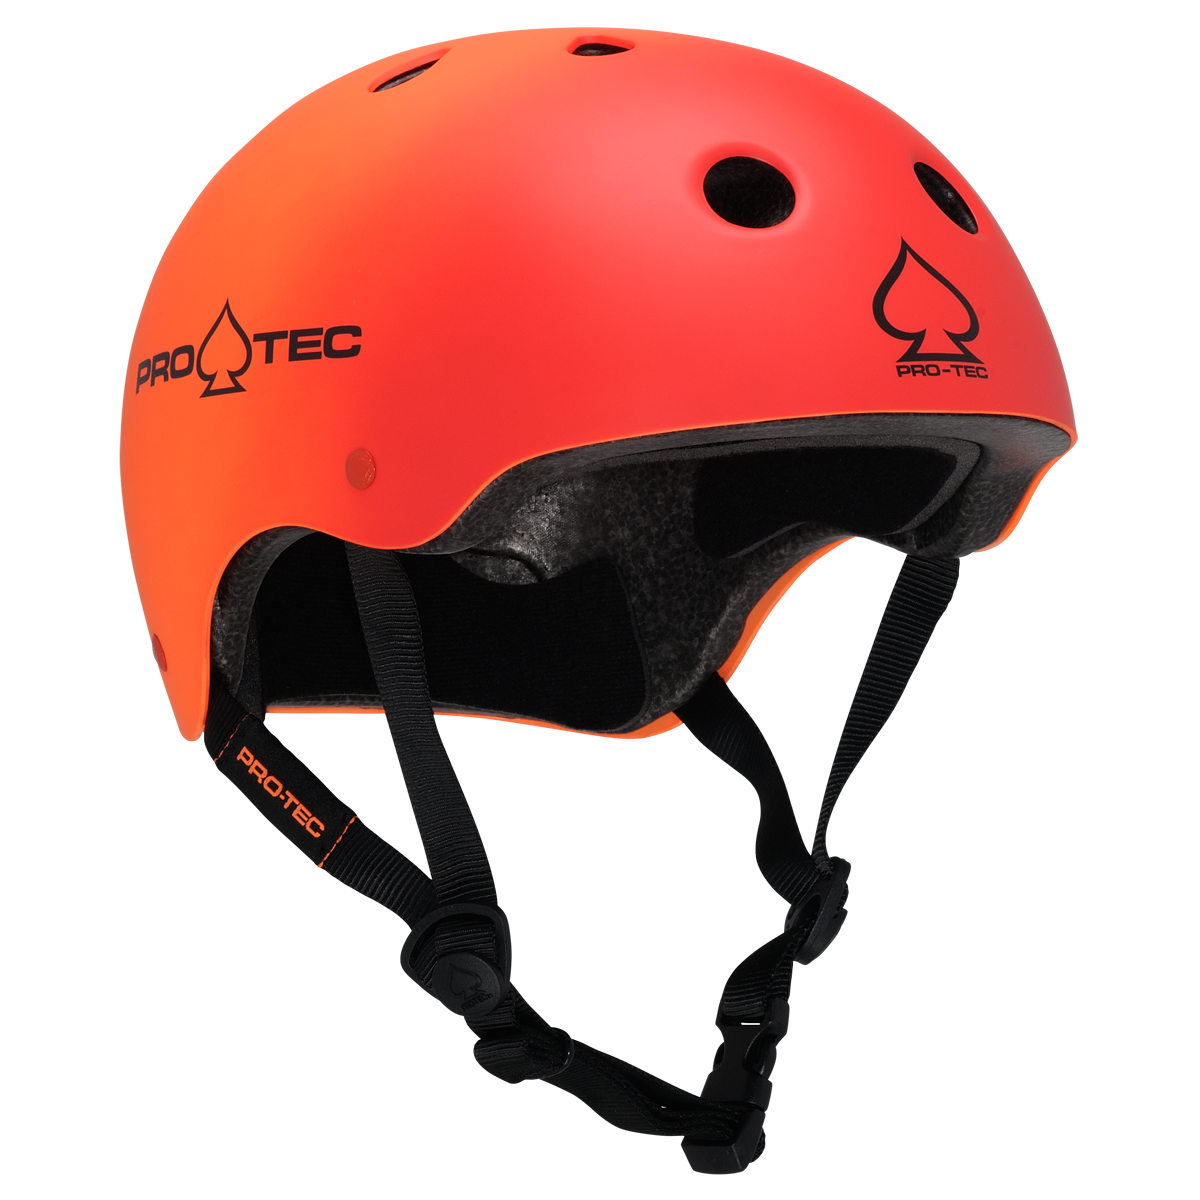 red-orange-helmet